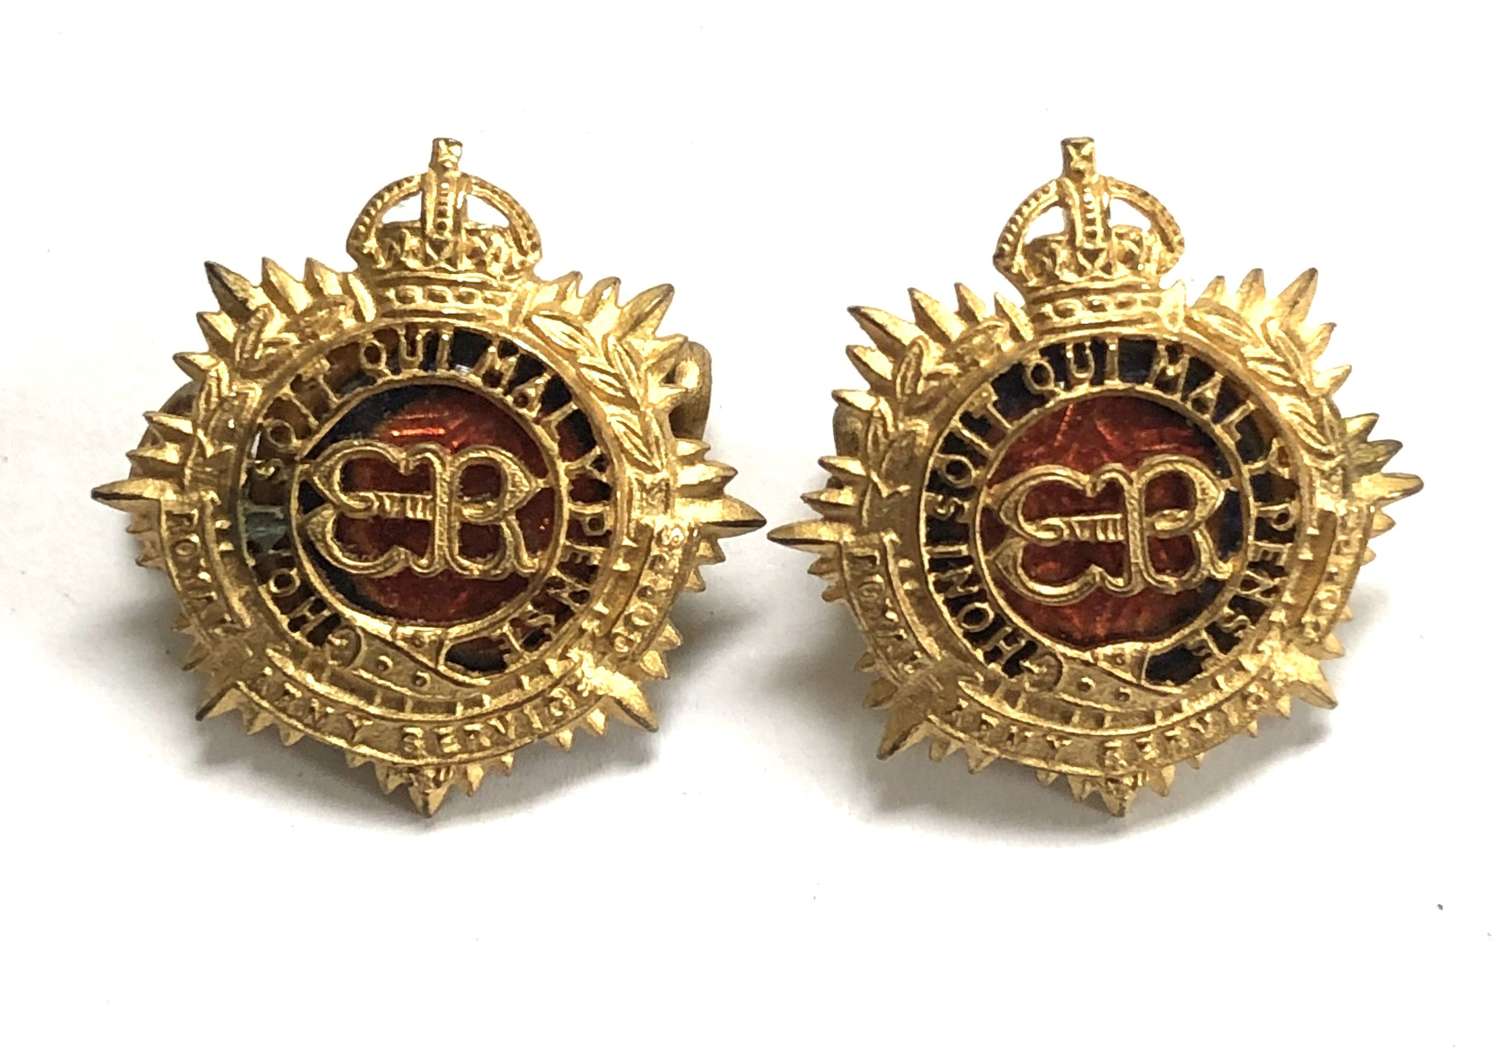 Royal Army Service Corps 1936 EVIIIR Officer’s collar badges by Gaun